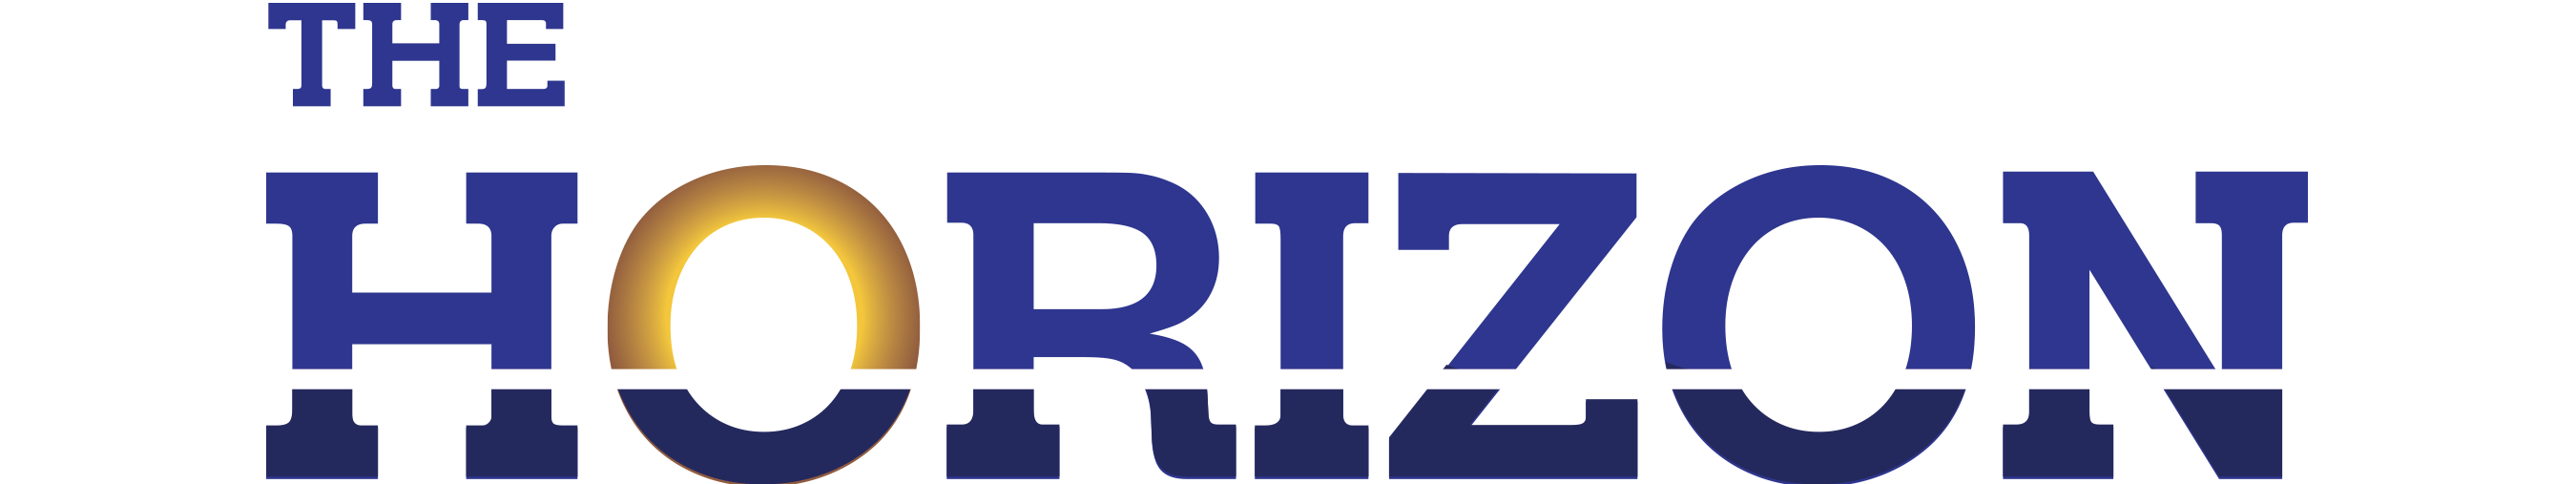 The Horizon logo